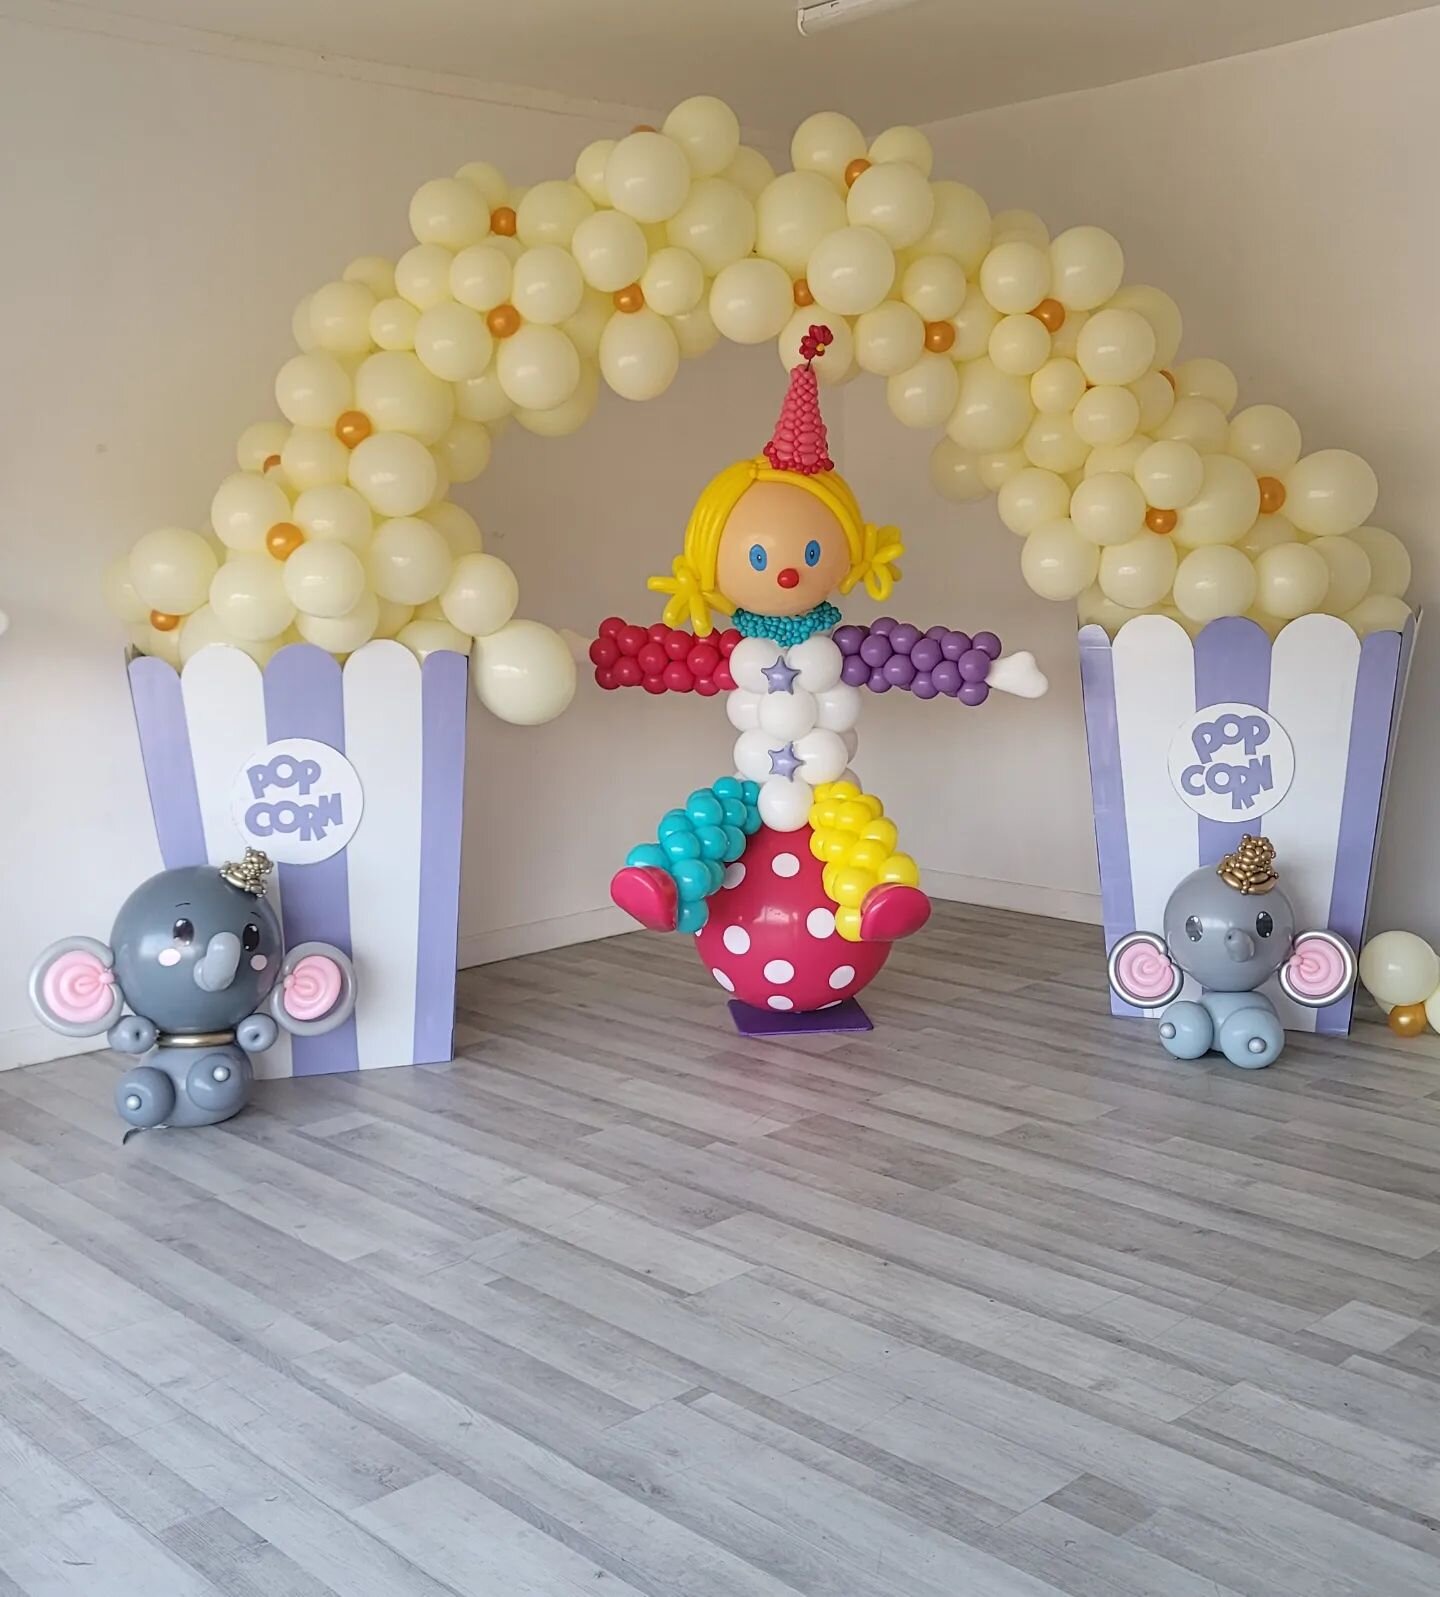 Popcorn Balloon Arch
#popcornballoonarch #circusthemeparty #organicballoongarland #organicballoondecor